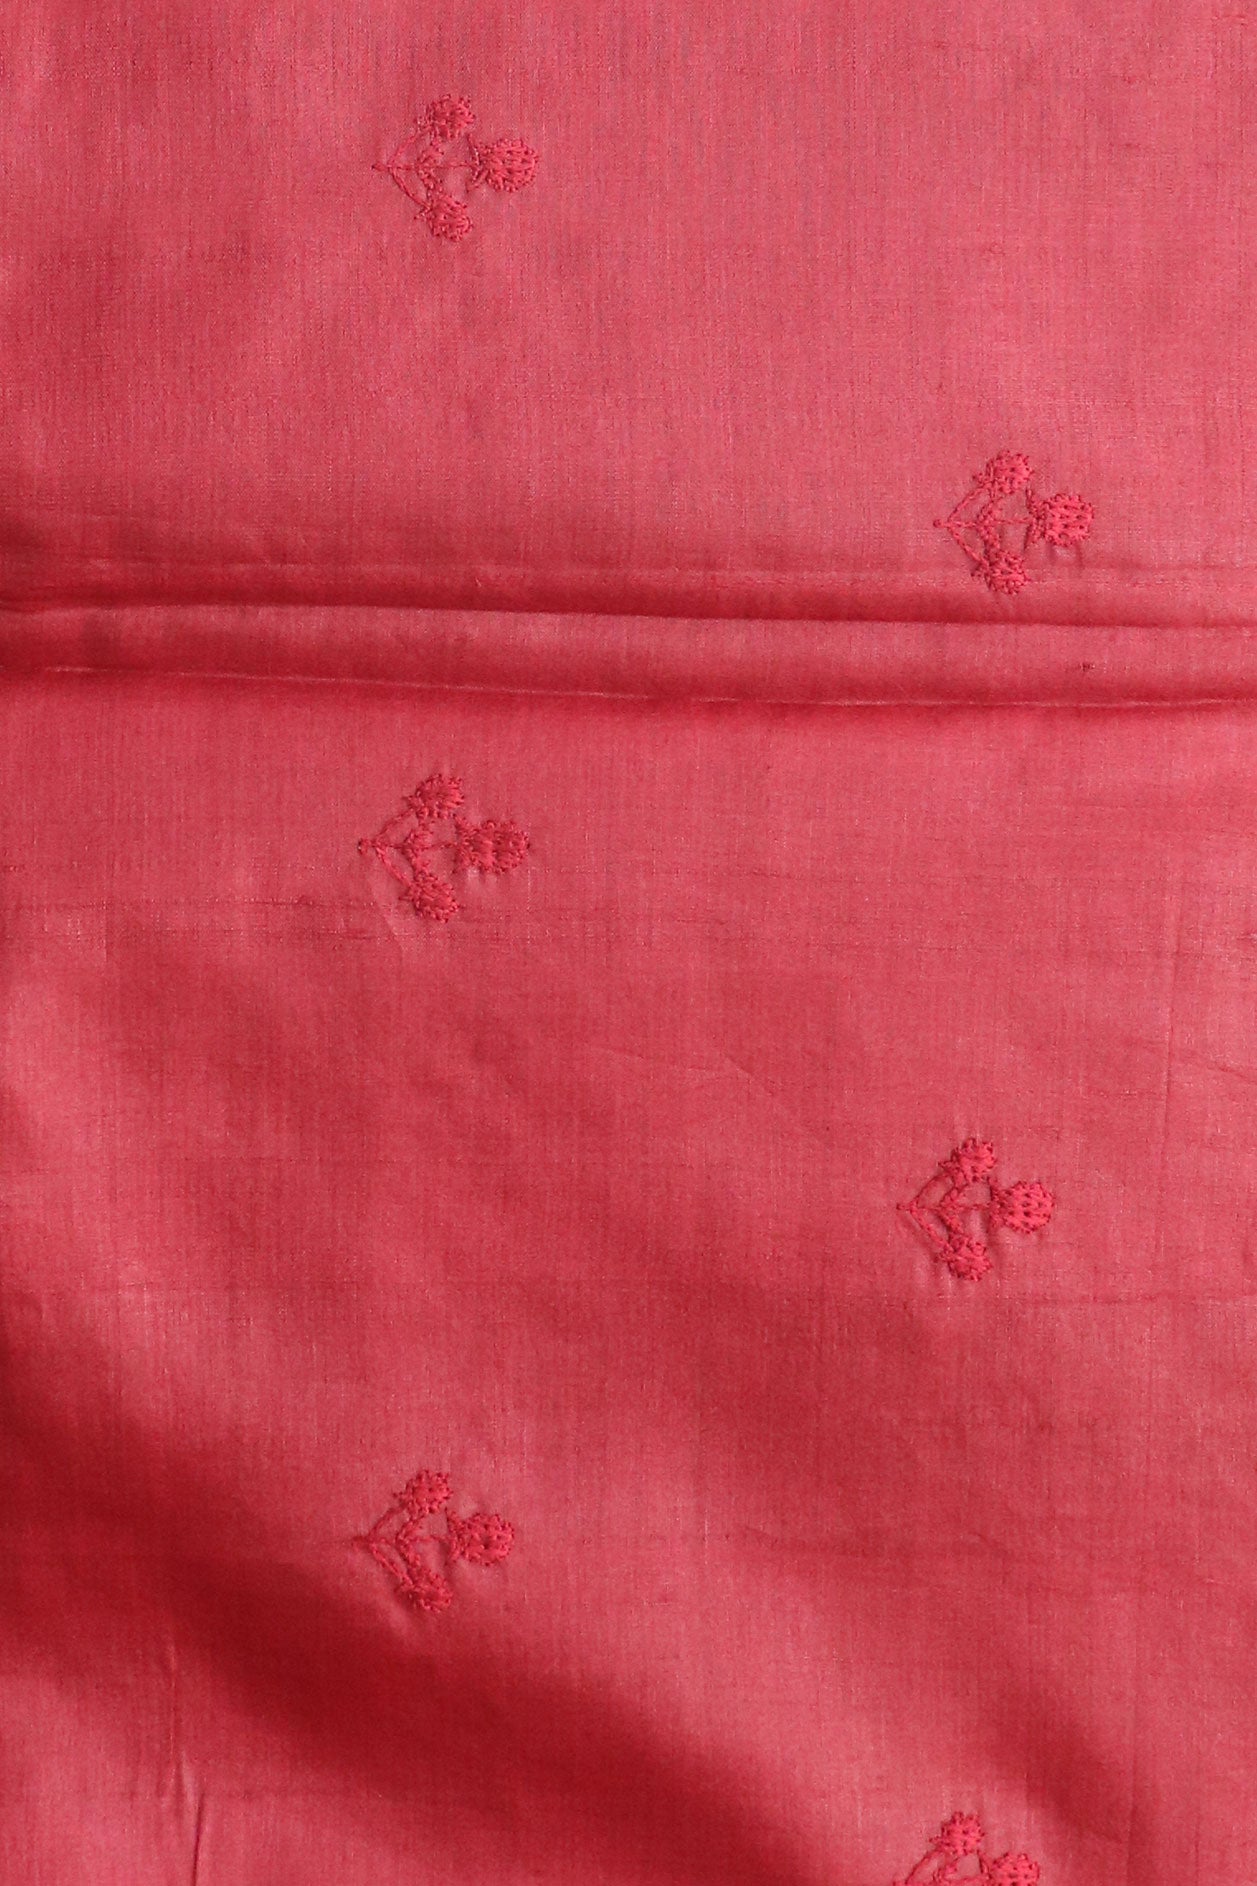 Embroidered Floral Border In Buttas Apple Pink Tussar Silk Saree